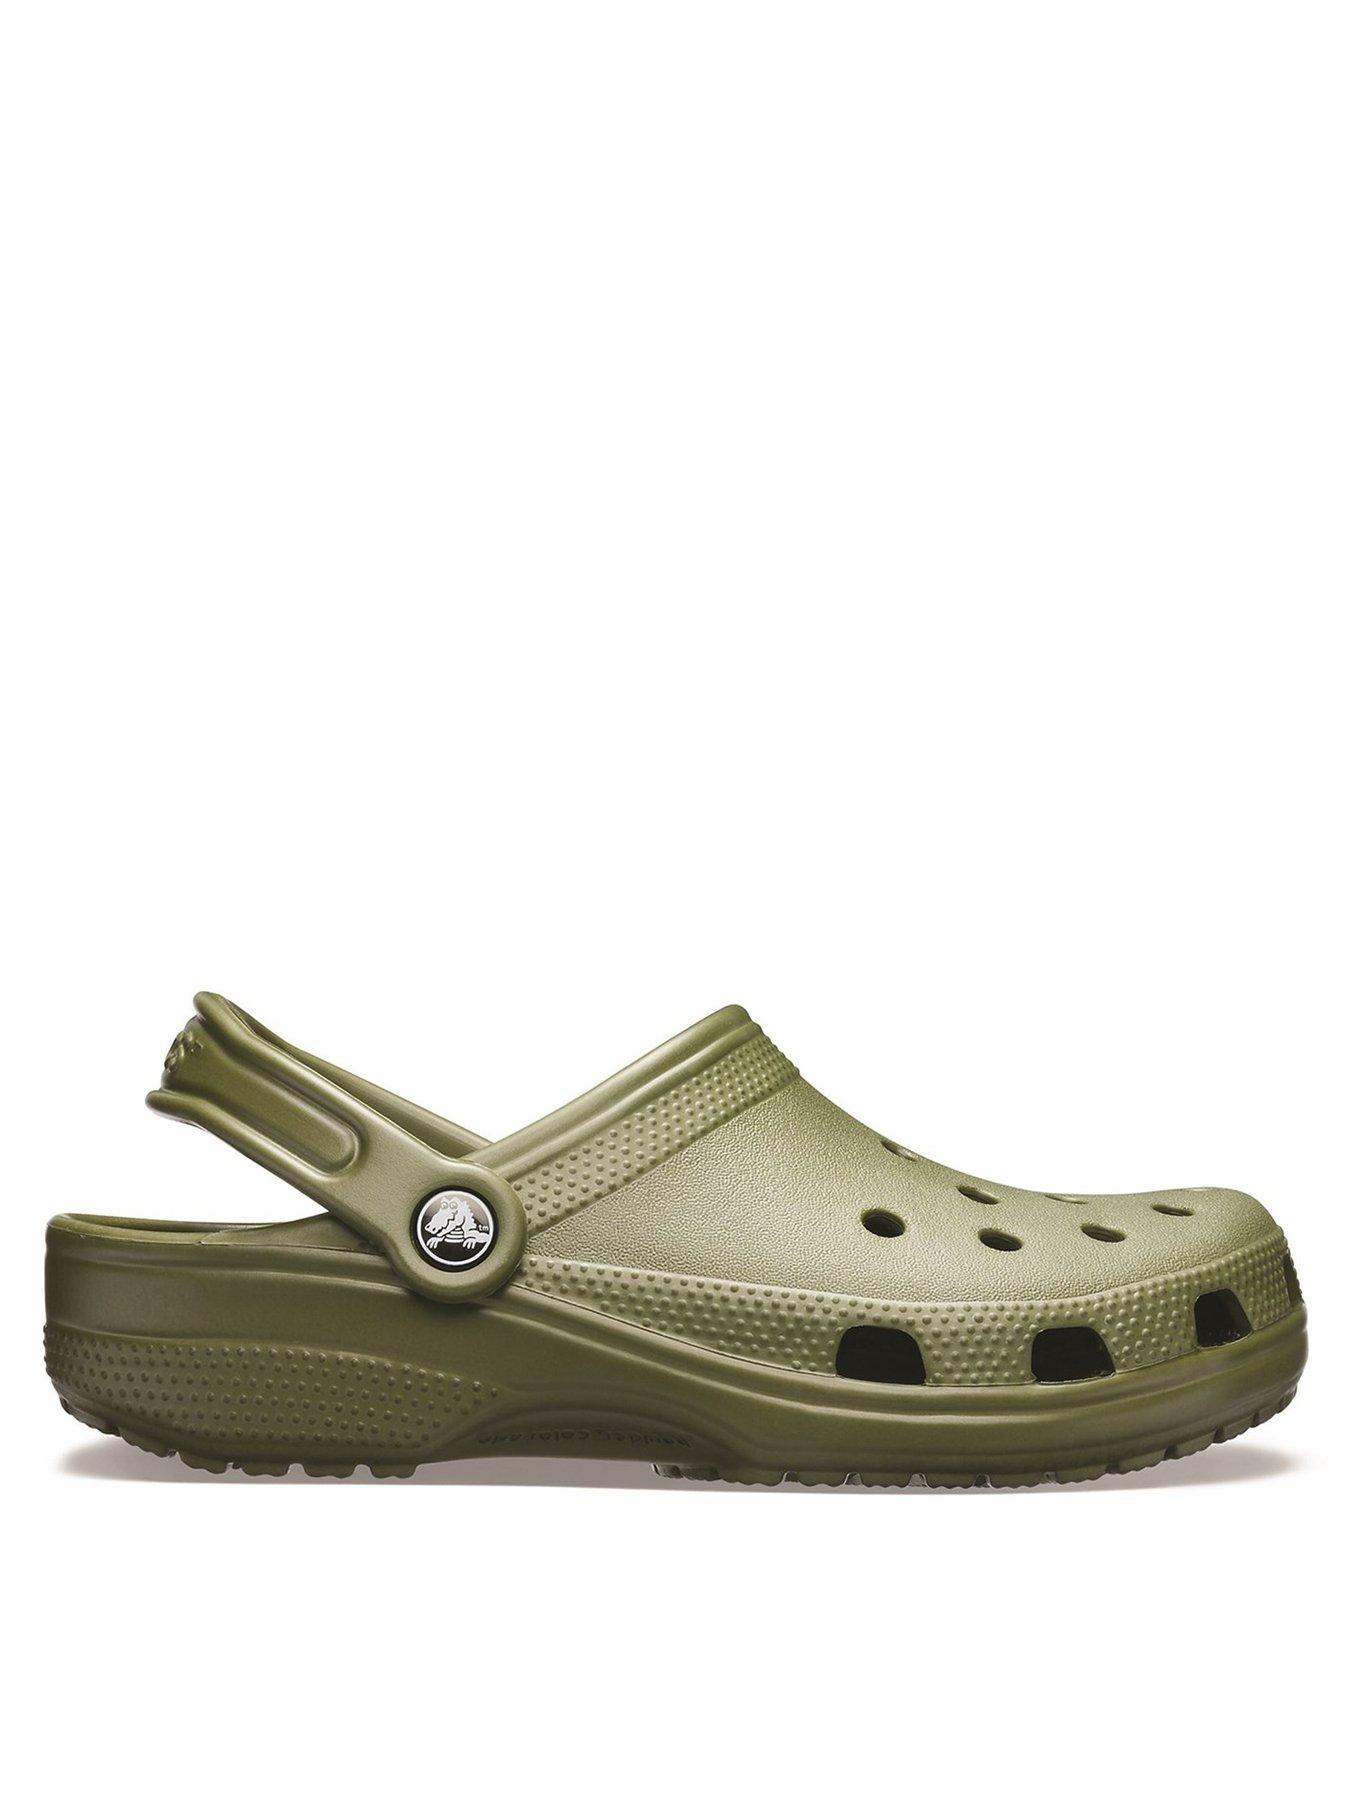 Crocs Classic Clogs - Khaki 